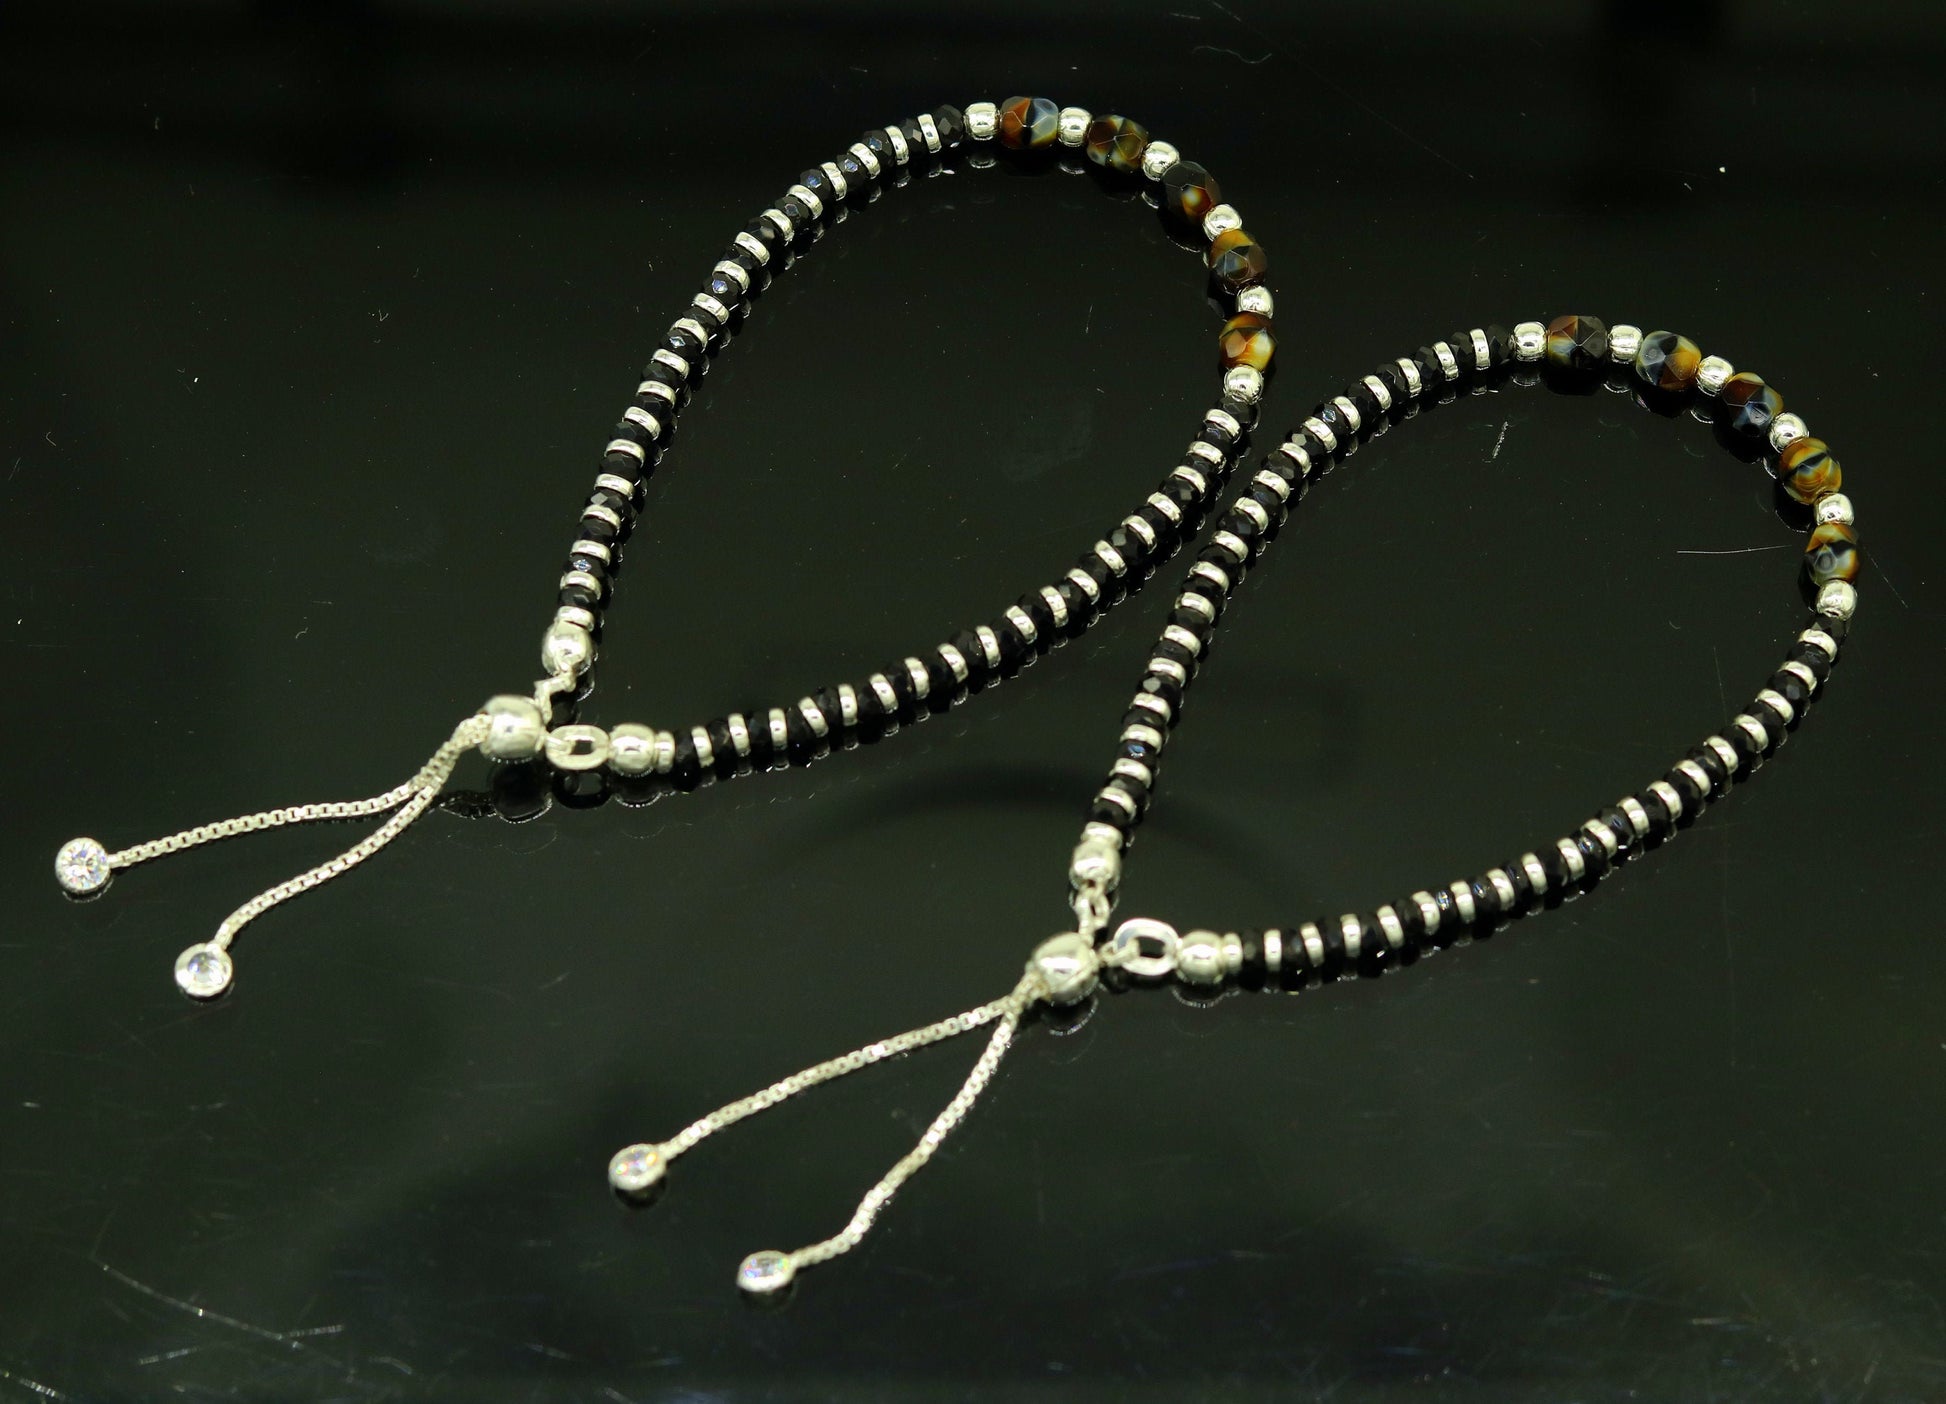 Stylish 925 sterling silver beaded with black onyx stone handmade charm adjustable bracelet 'Nazariya' charm jewelry for girls sbr182 - TRIBAL ORNAMENTS